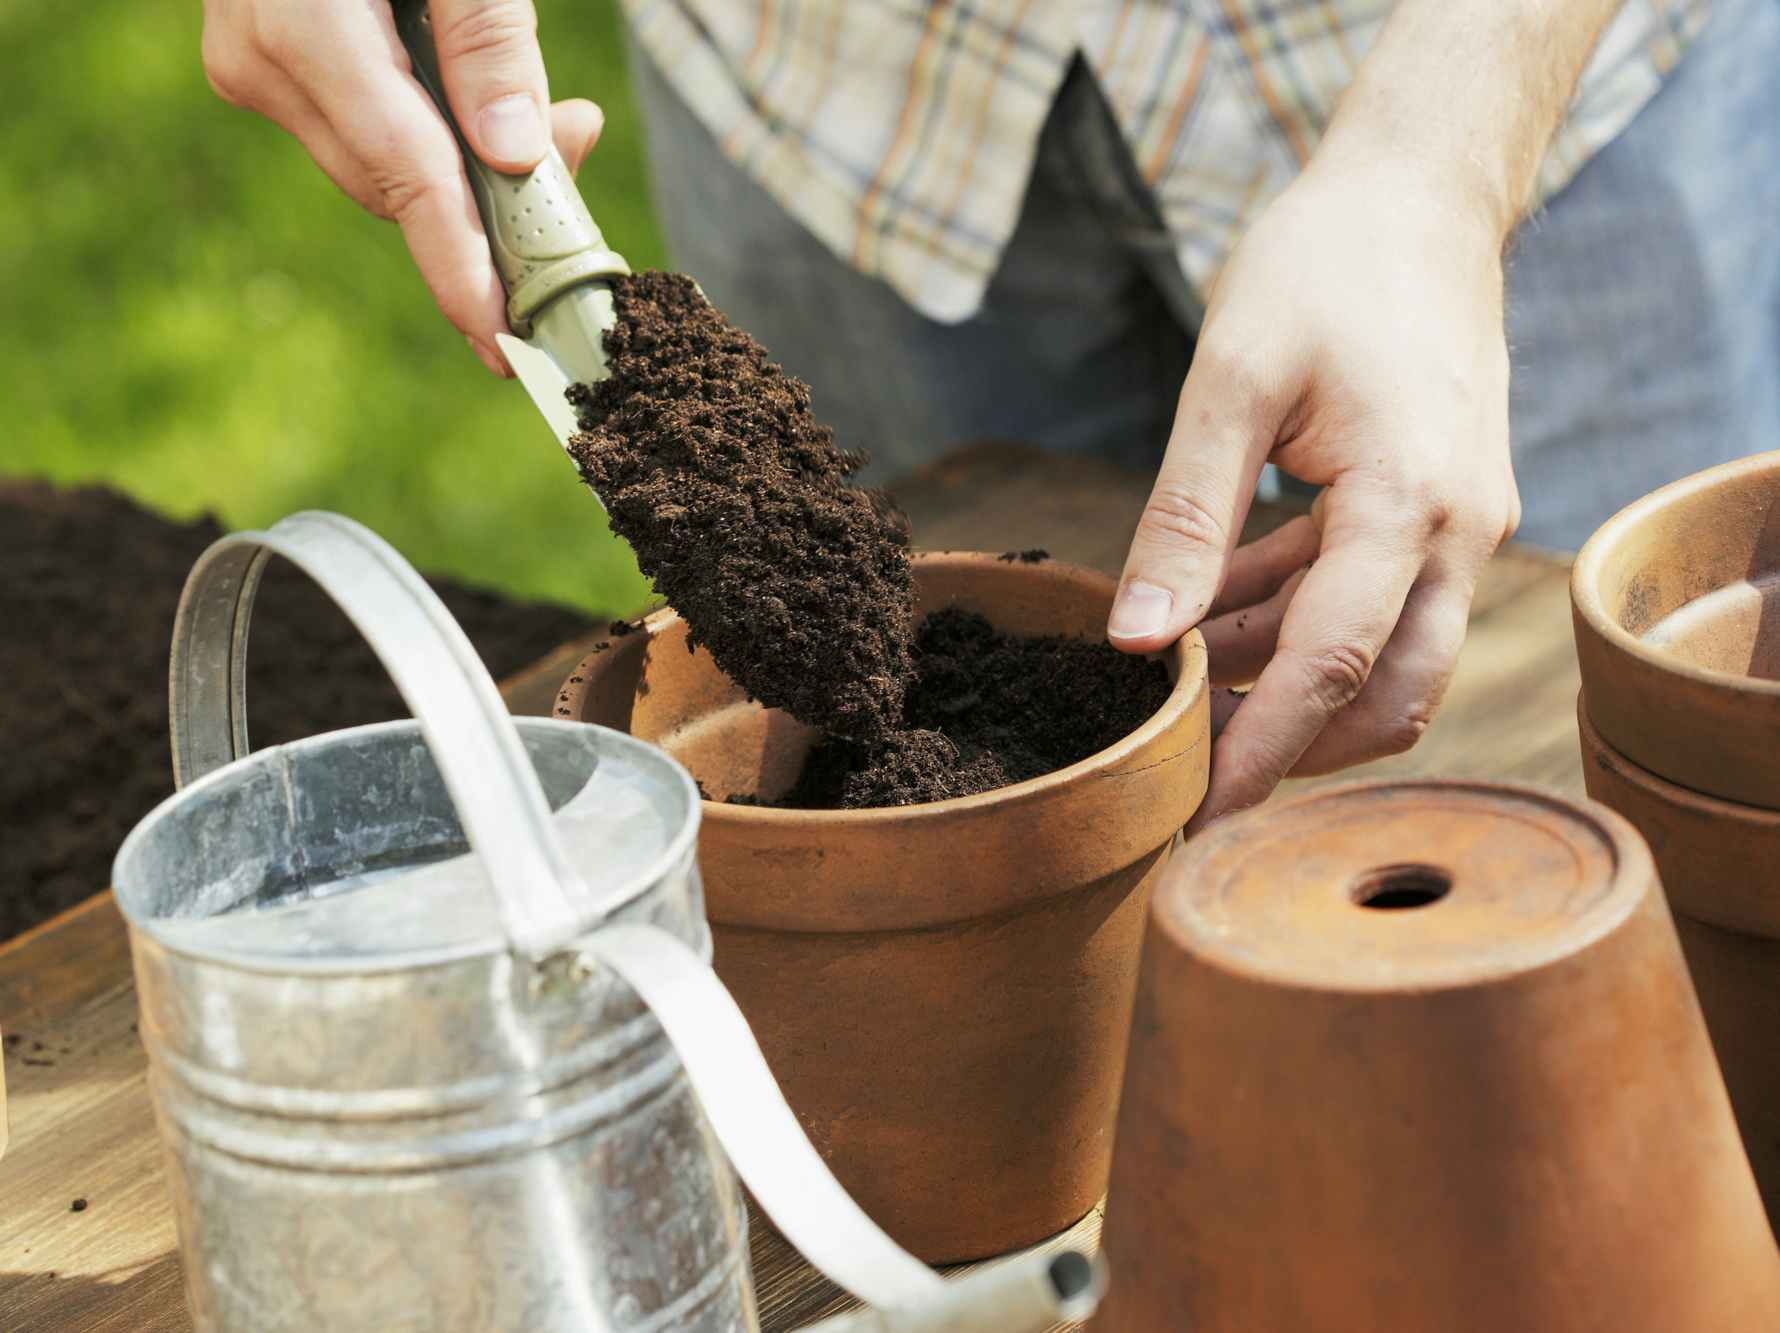 A person putting soil into a planter